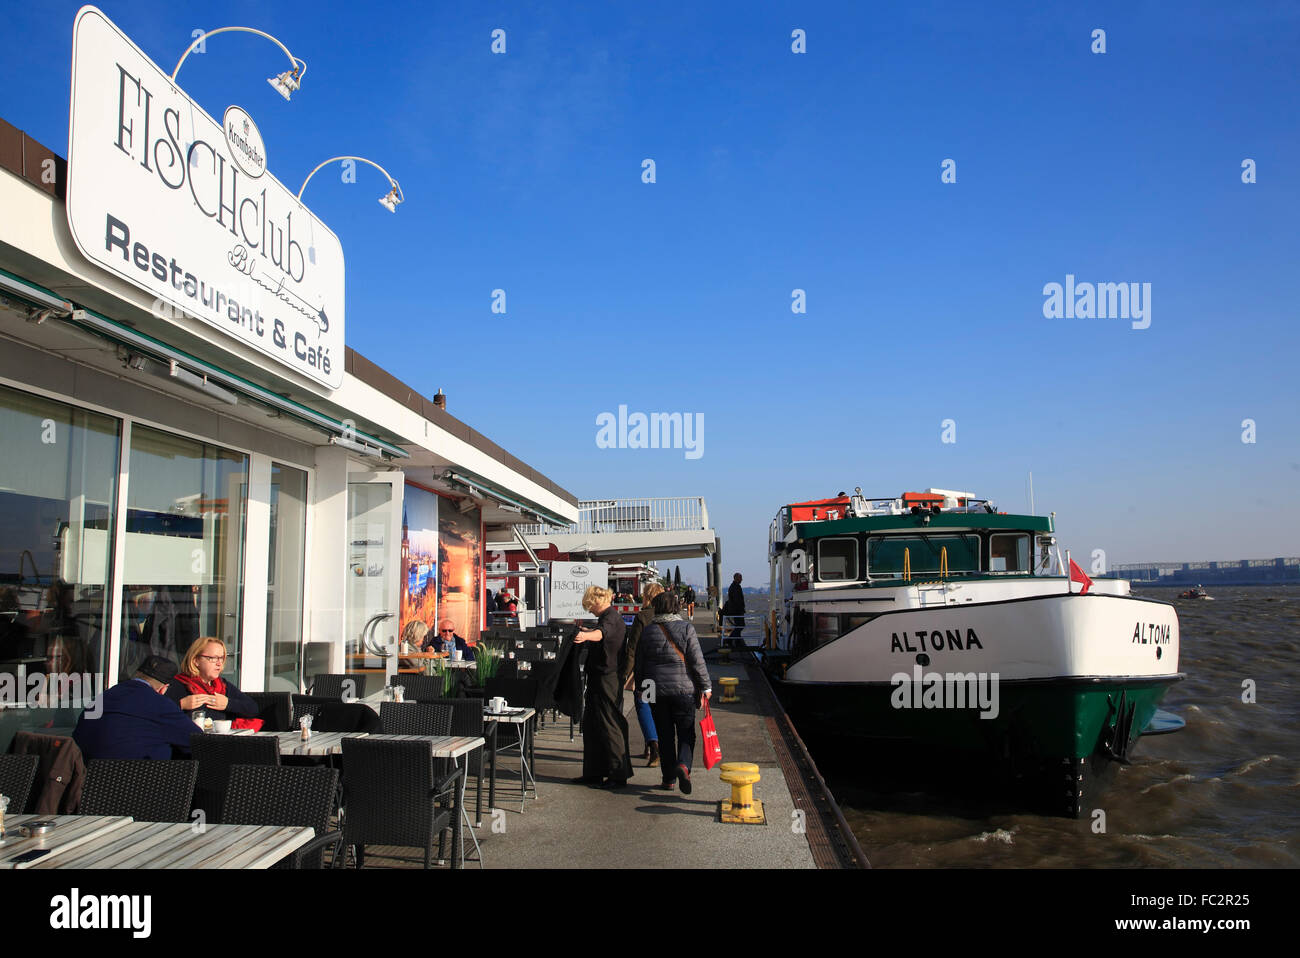 Fisch restaurant et café FISCHclub on jetty pier Blankenese, Blankenese, Hambourg, Allemagne, Europe Banque D'Images